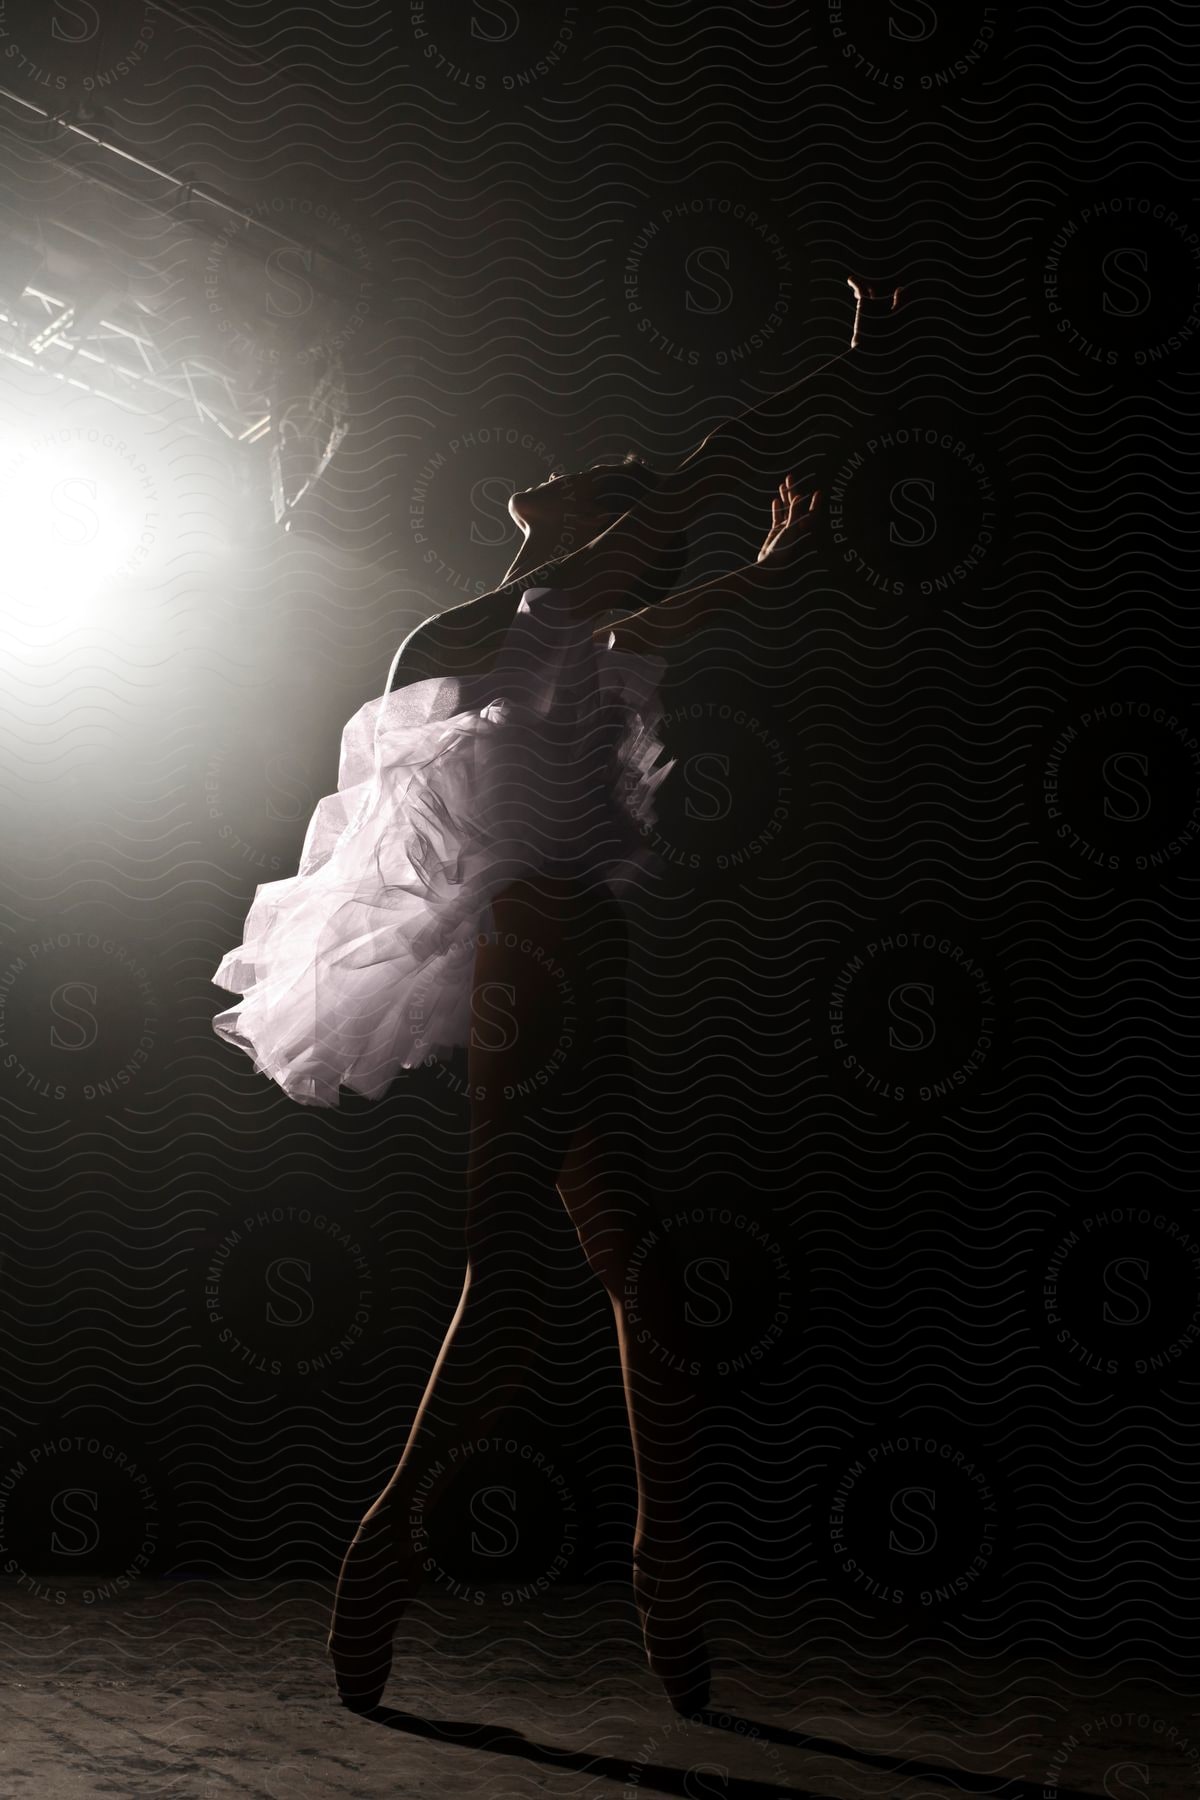 A ballet dancer stands en pointe